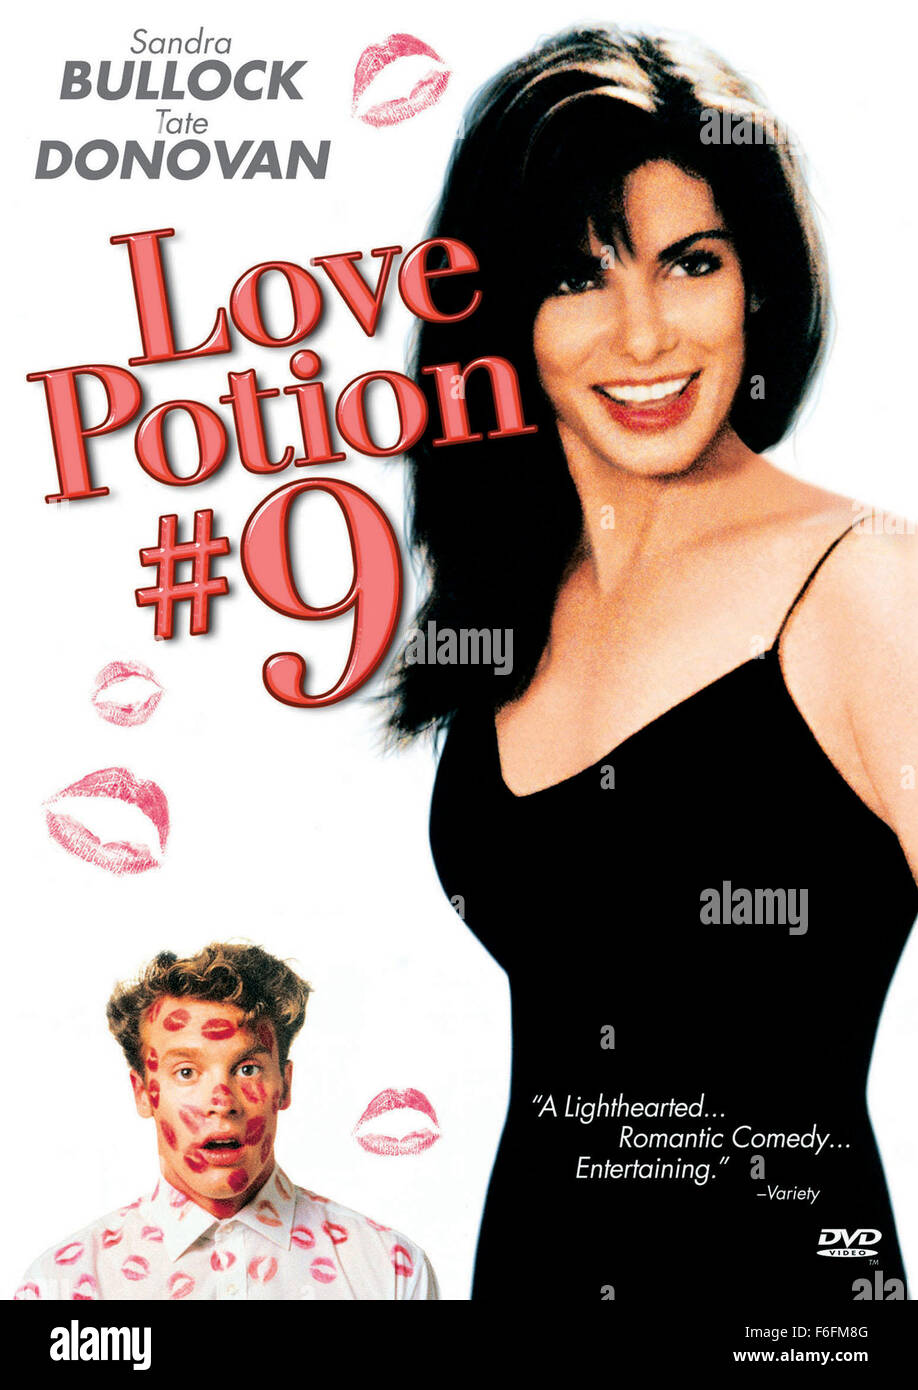 Jan 23, 1992; Hollywood, CA, USA; Image of director Dale Launer's 'Love Potion No. 9' starring SANDRA BULLOCK as Diane Farrow and TATE DONOVAN as Paul Matthews. Stock Photo